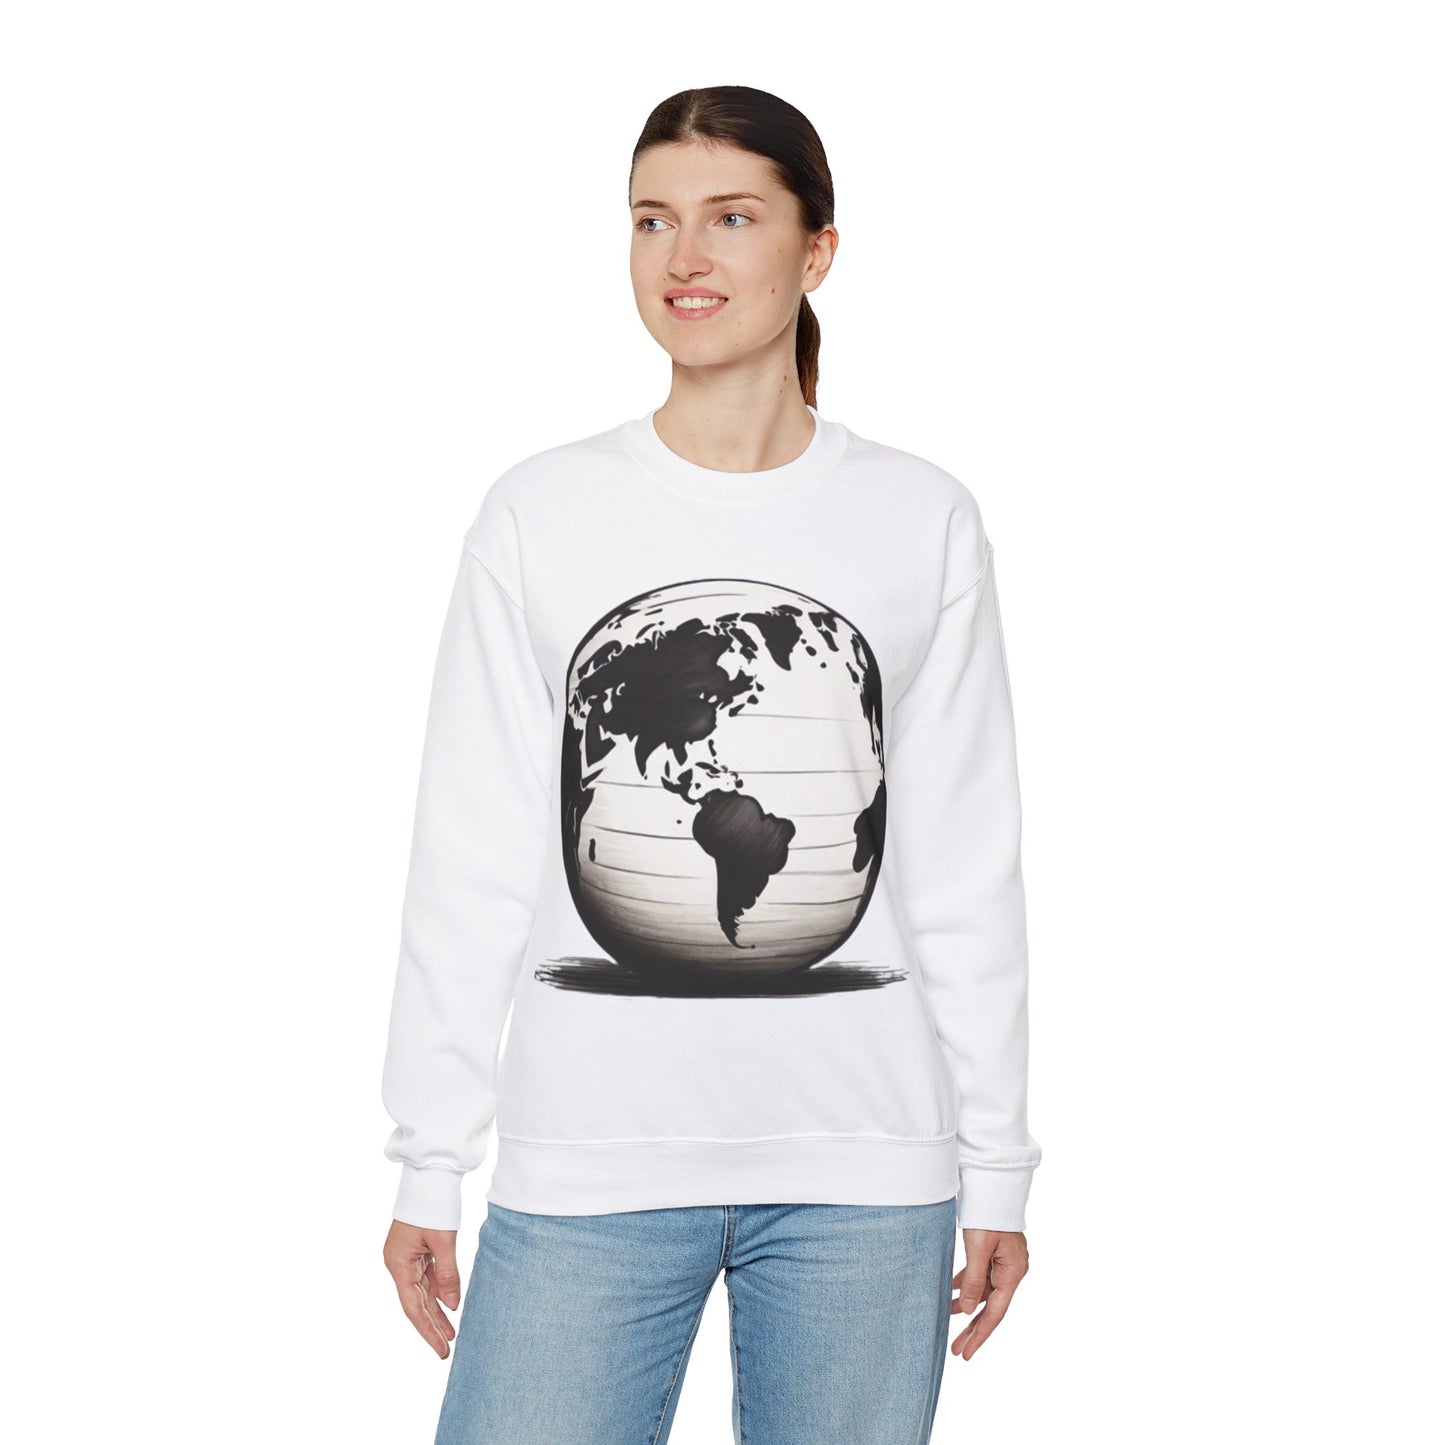 Black and White Earth Sphere - Unisex Crewneck Sweatshirt